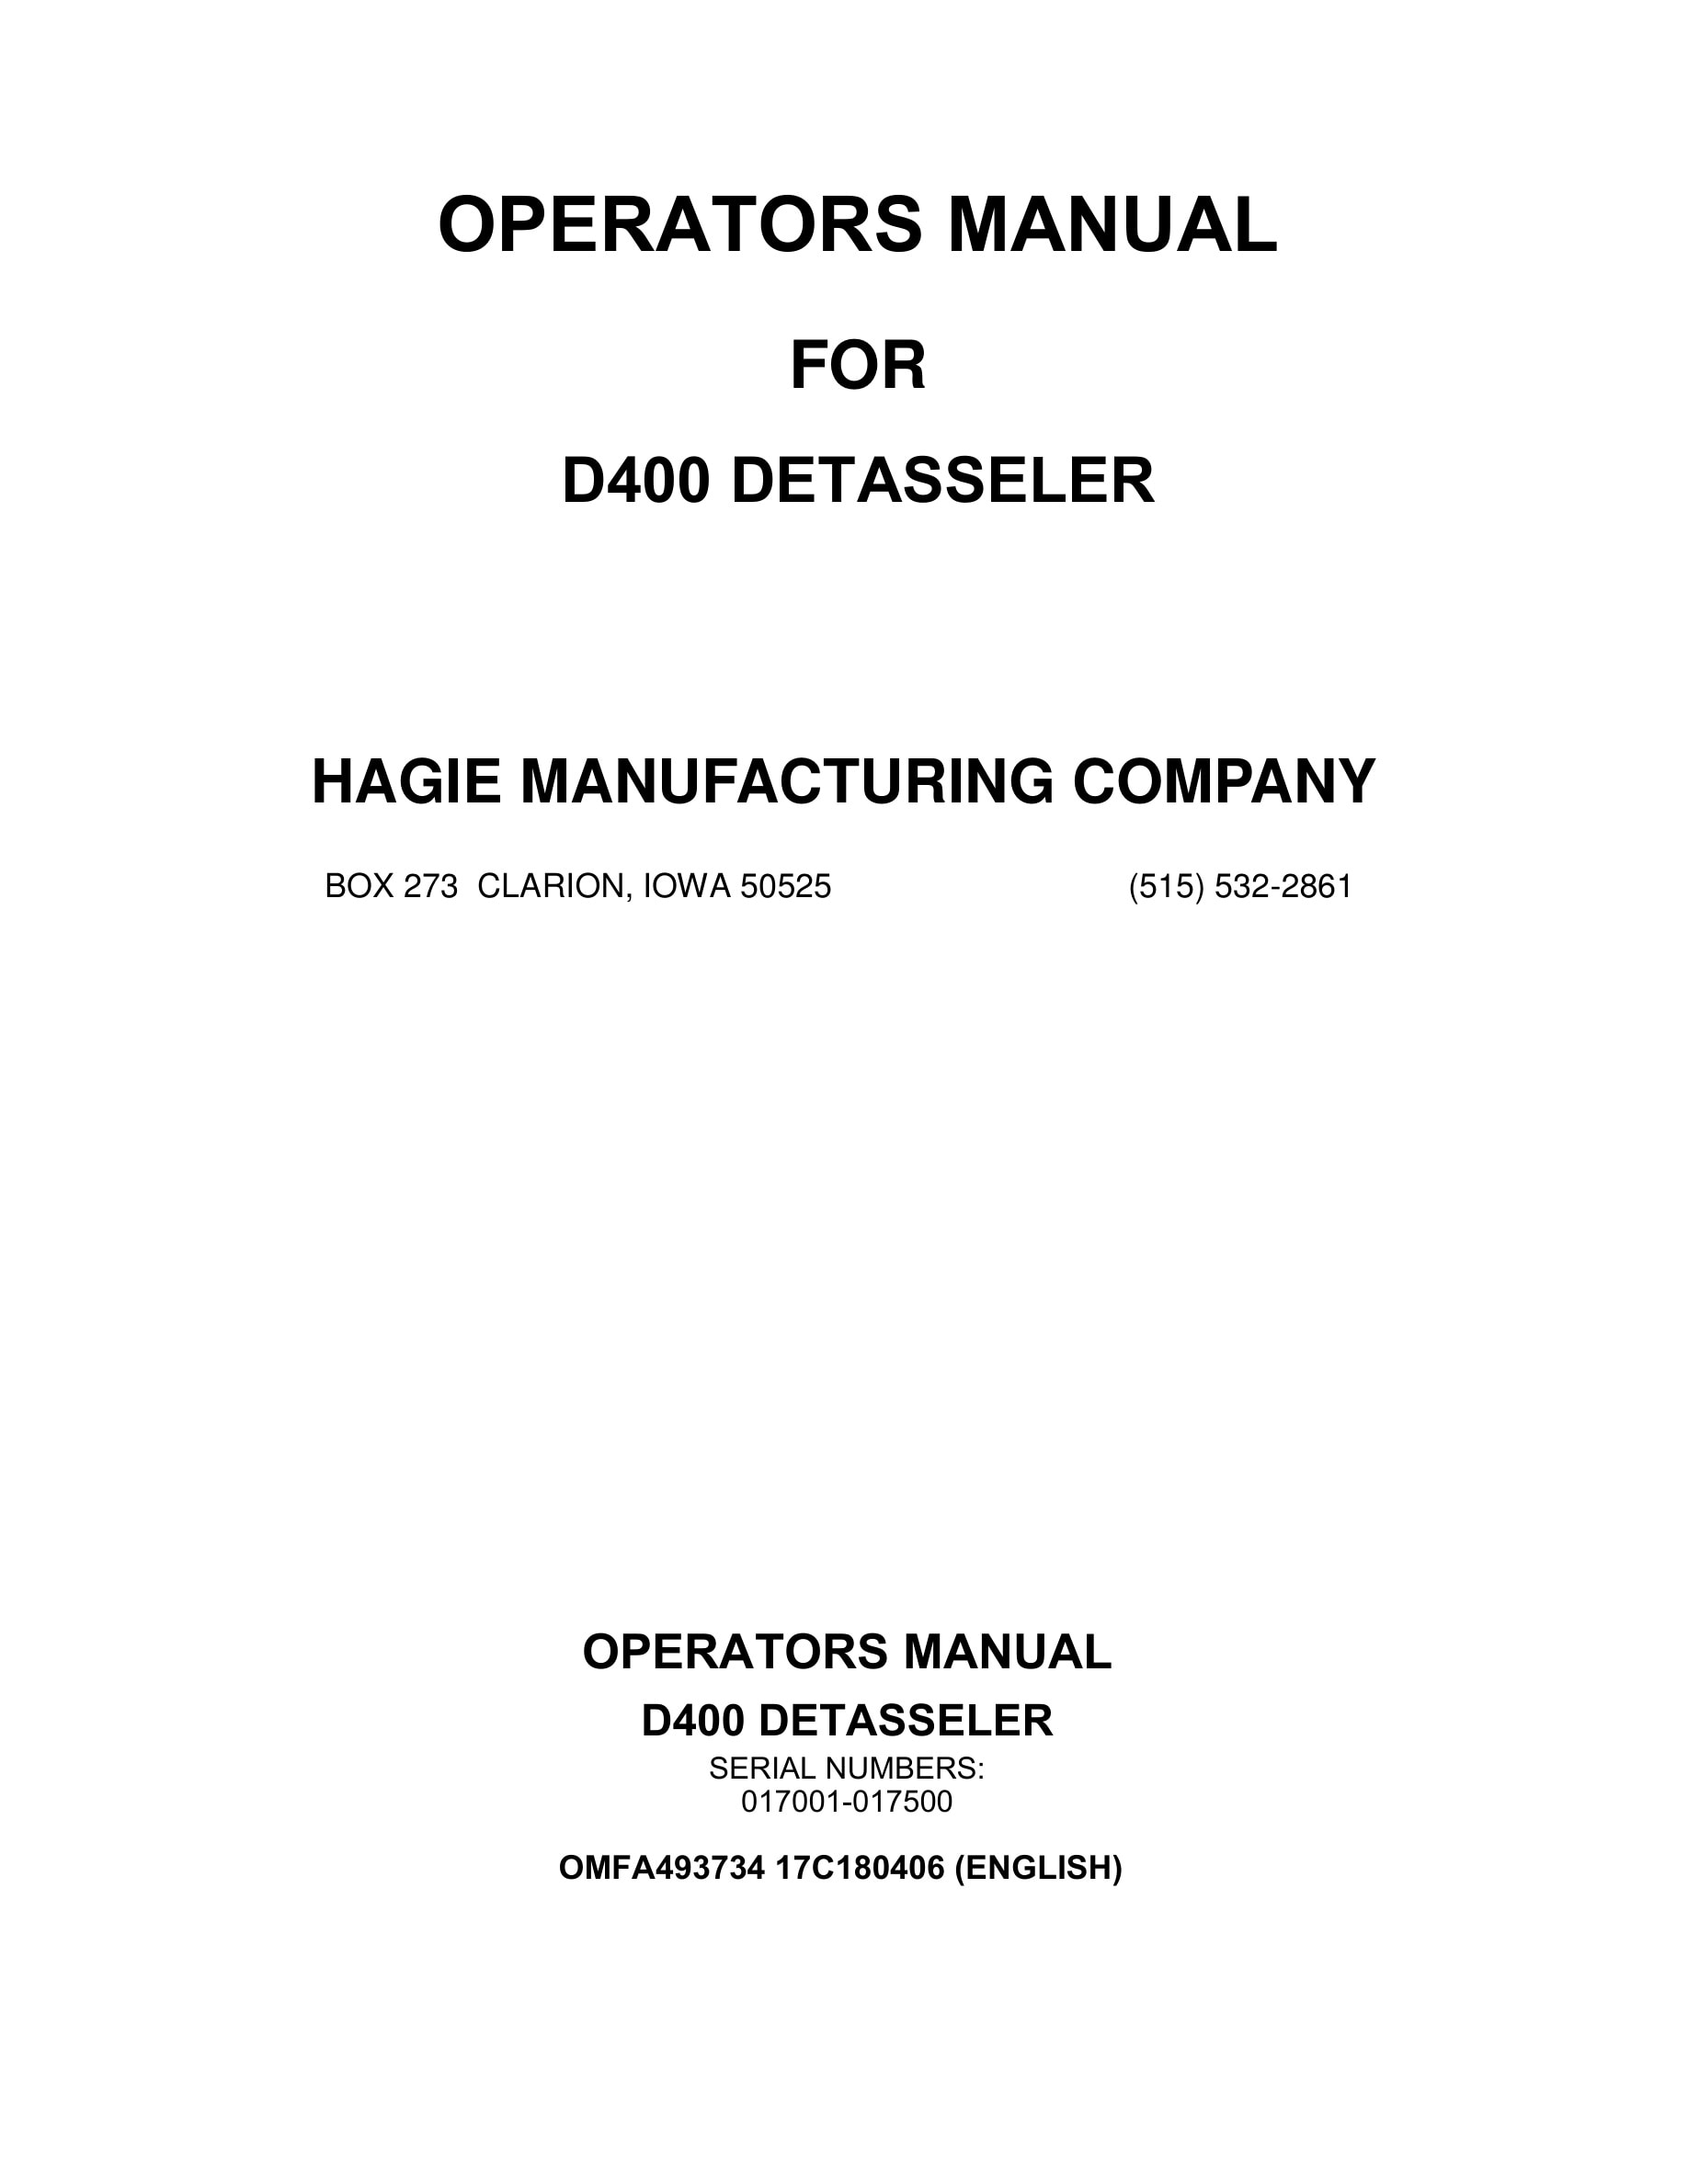 John Deere D400 DETASSELER Operator Manual OMFA493734-1